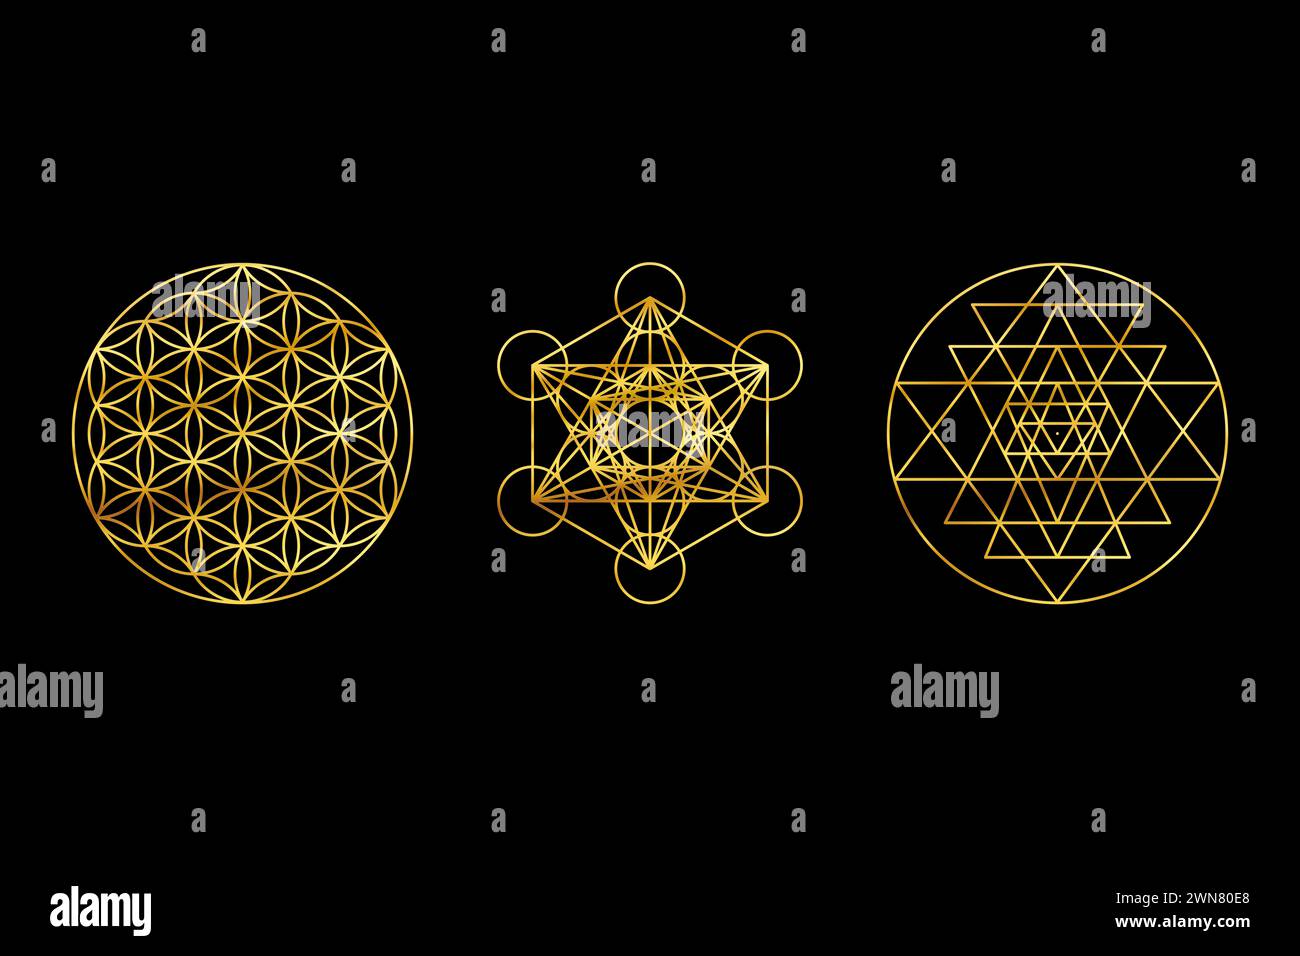 Sacred Geometry Gold Symbols on Black Background. Sri Yantra, Flower Of Life, Metatron's Cube. Stock Photo